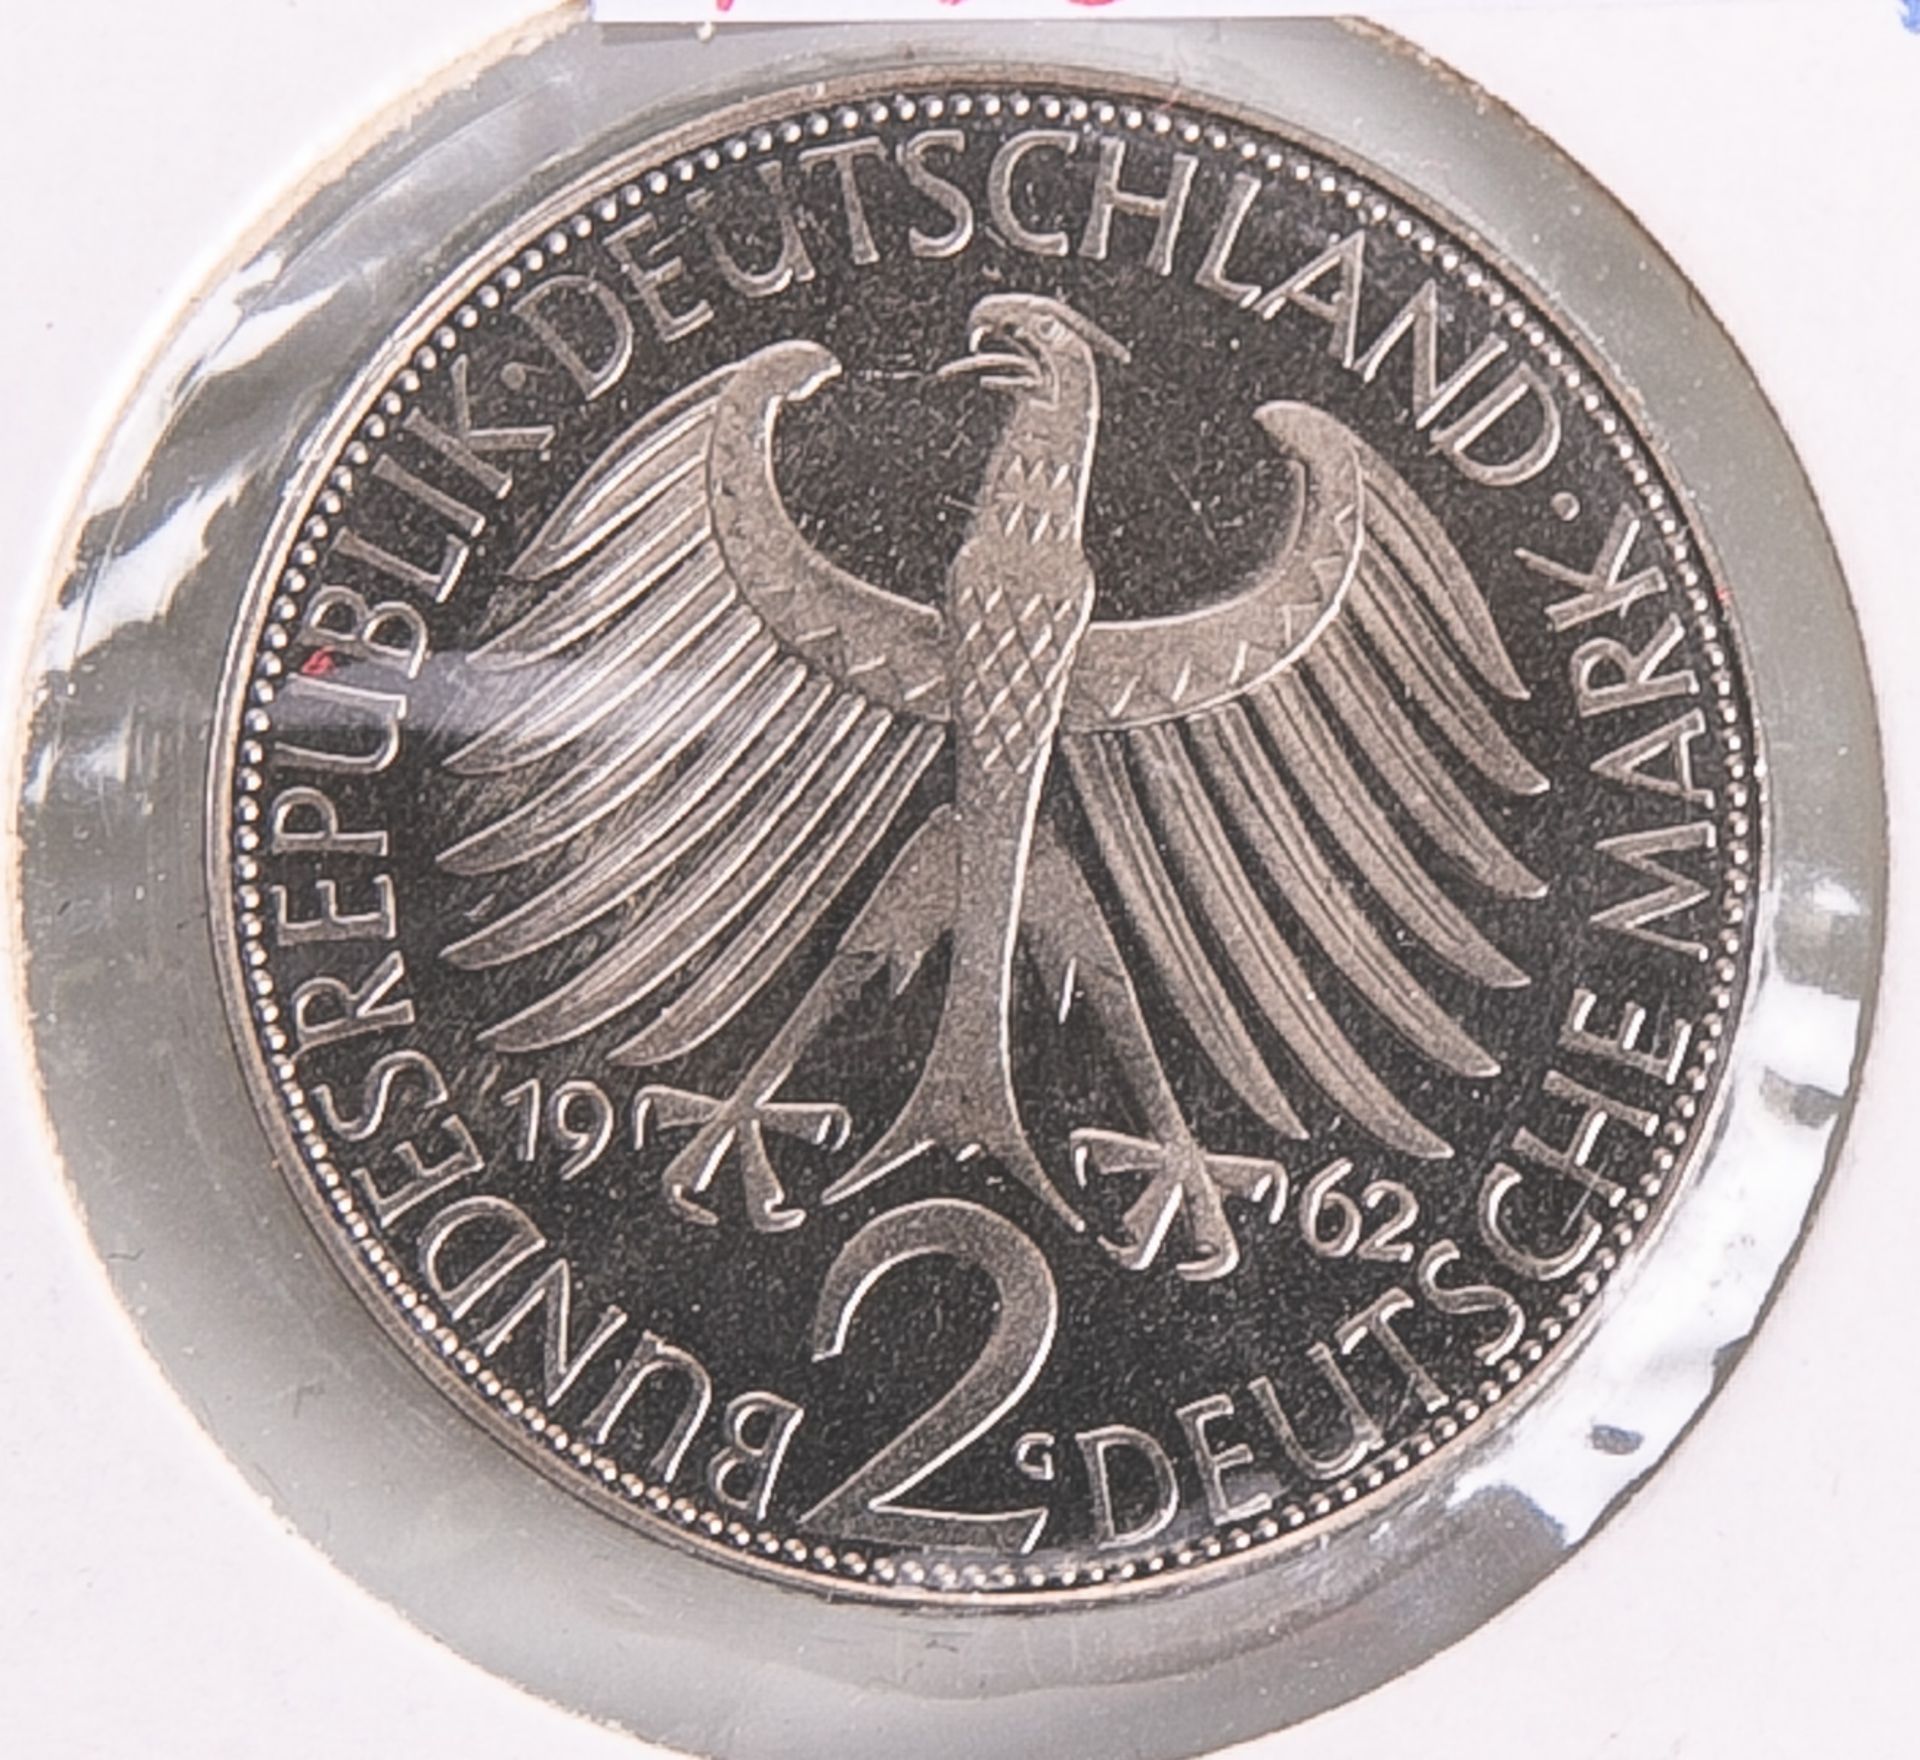 2 DM-Münze "Max Planck" (BRD, 1962), Münzprägestätte: G, Aufl. 130 Stück, eingeschweißt.PP.